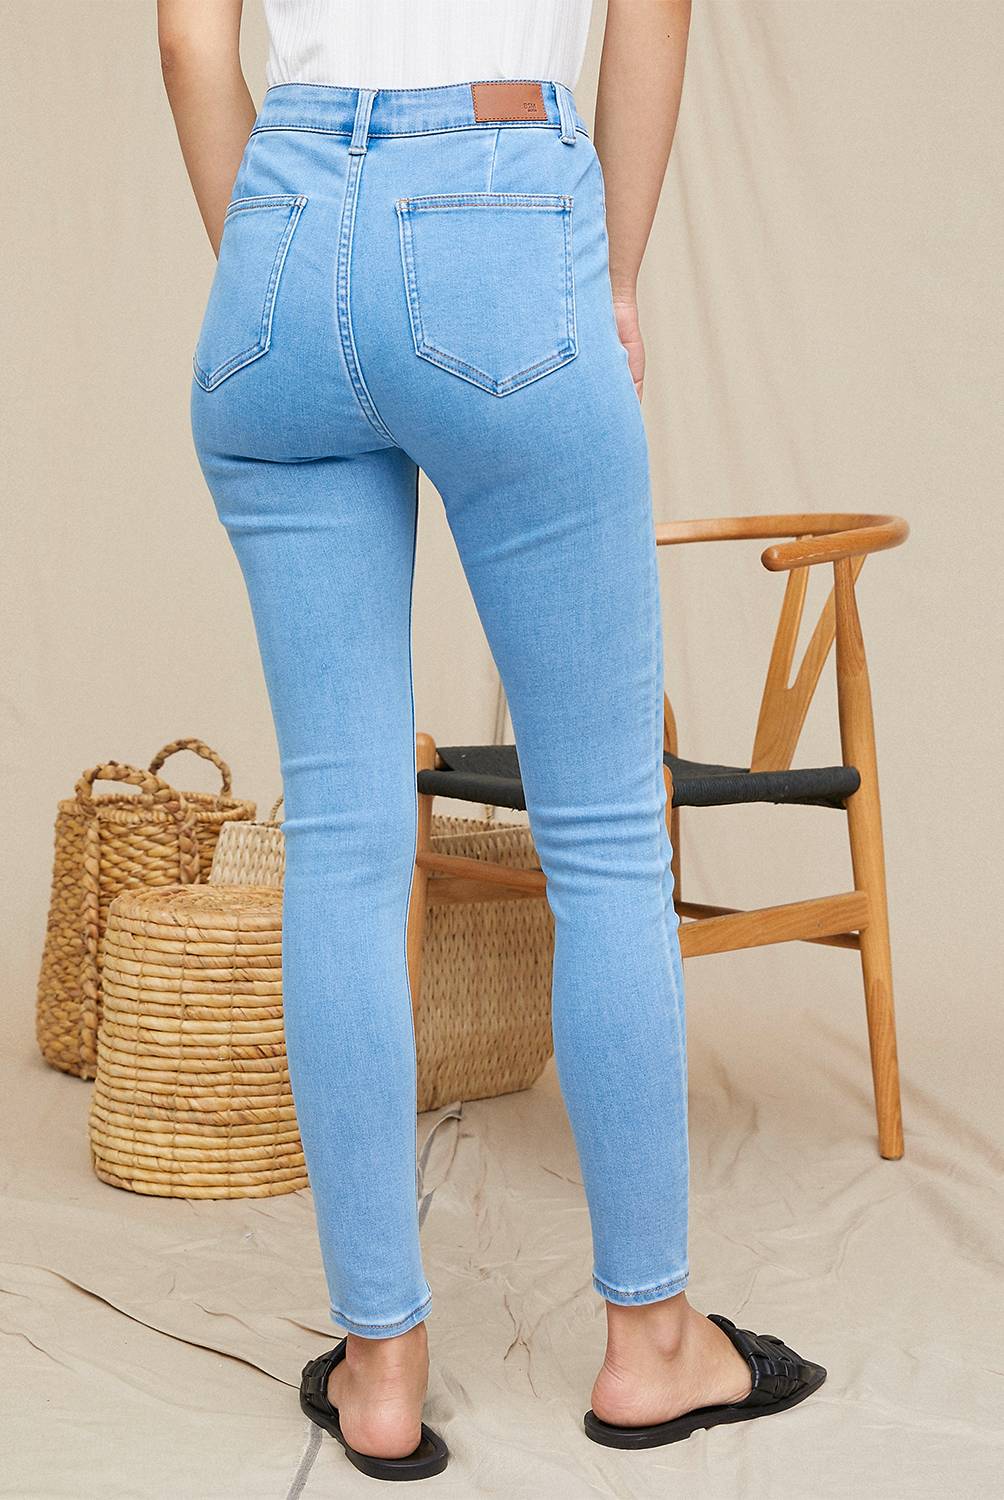 BASEMENT - Basement Jeans Skinny Tiro Alto Mujer